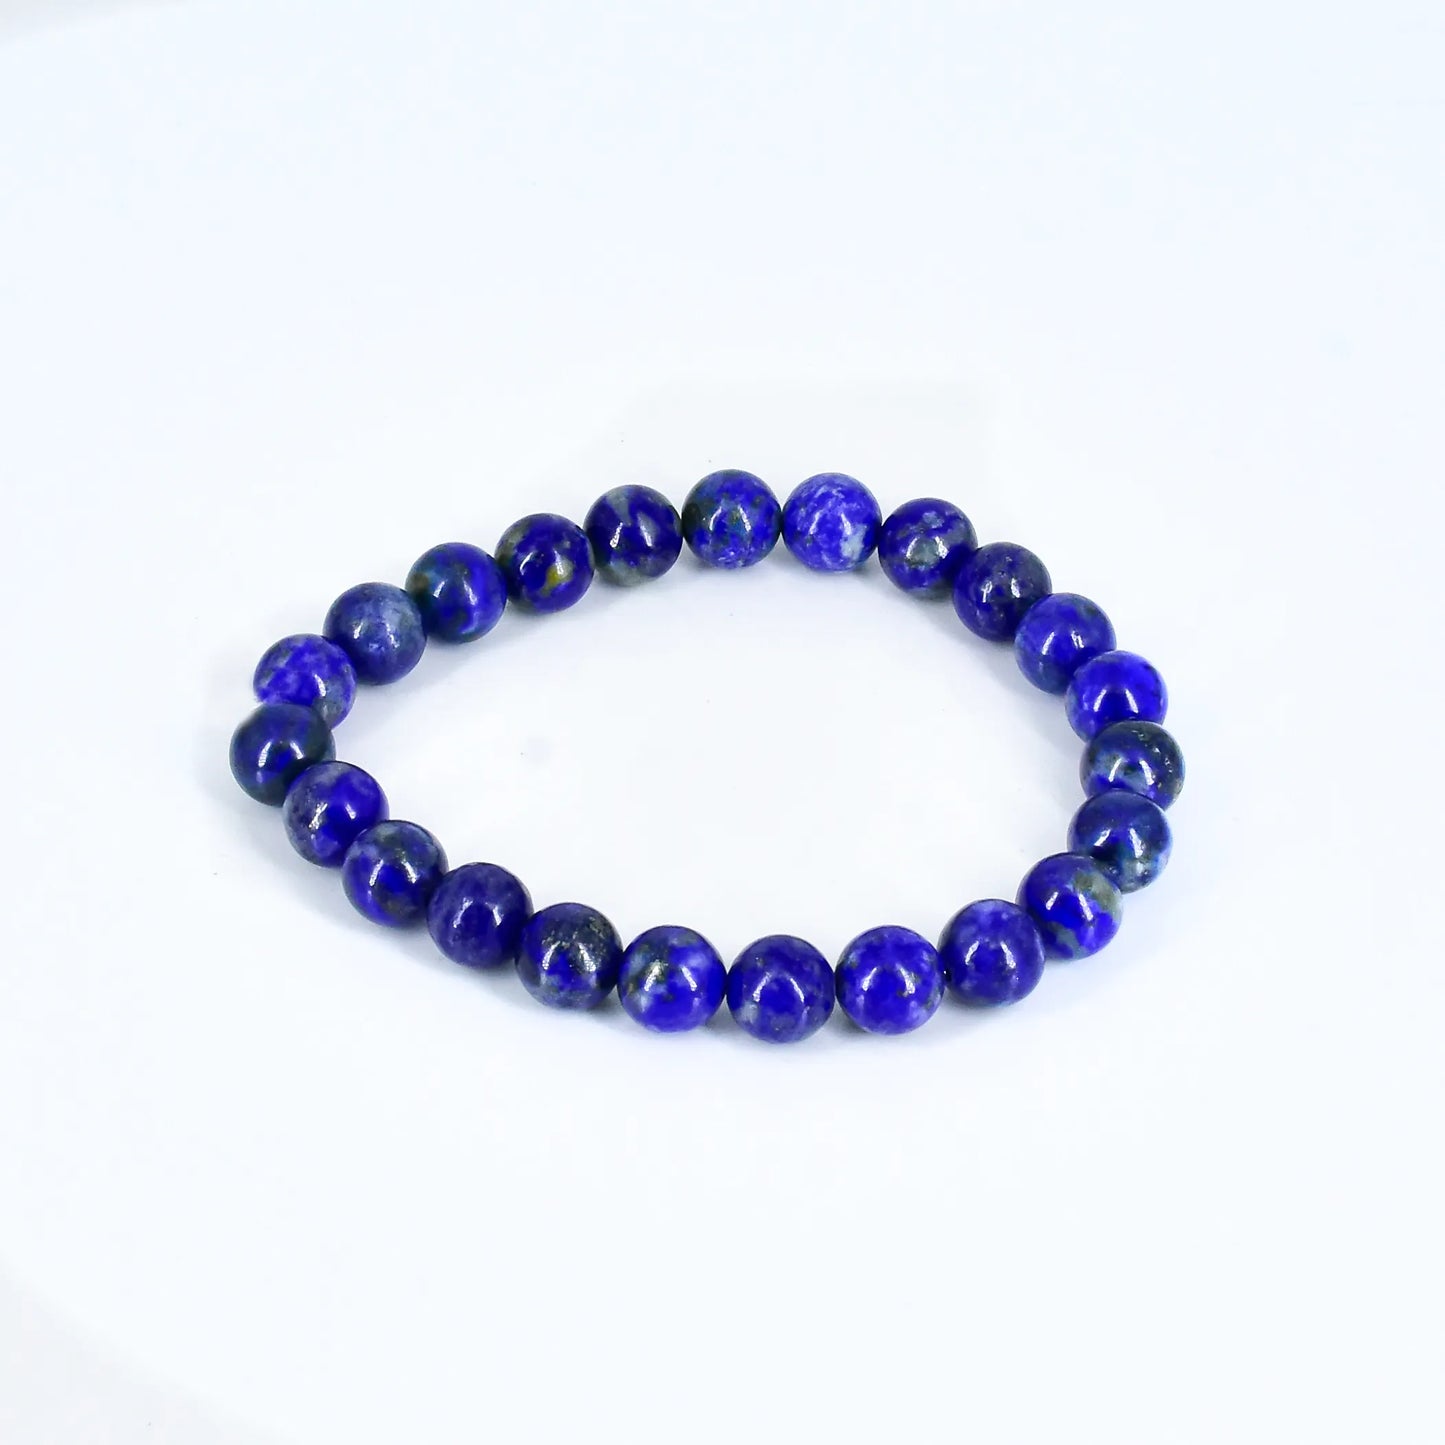 Reshamm Pre-Energized Unisex Premium Lapis Lazuli Natural Crystal Stone Bracelet for Spiritual Connection, Truth and Wisdom